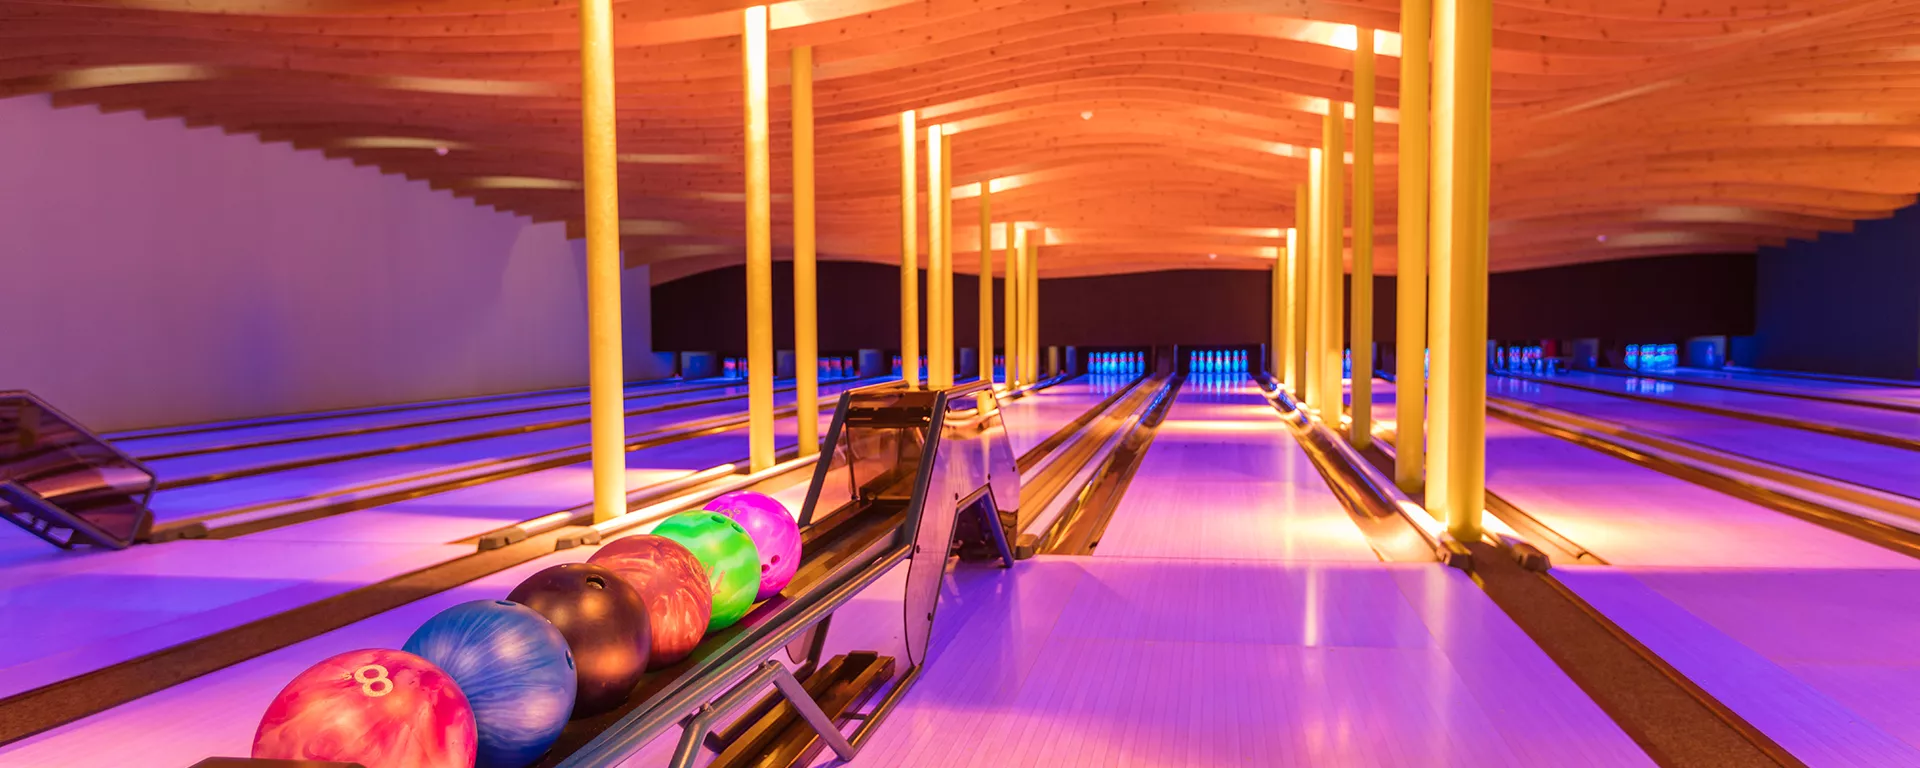 moderne Bowlingbahn im Hotel riverside